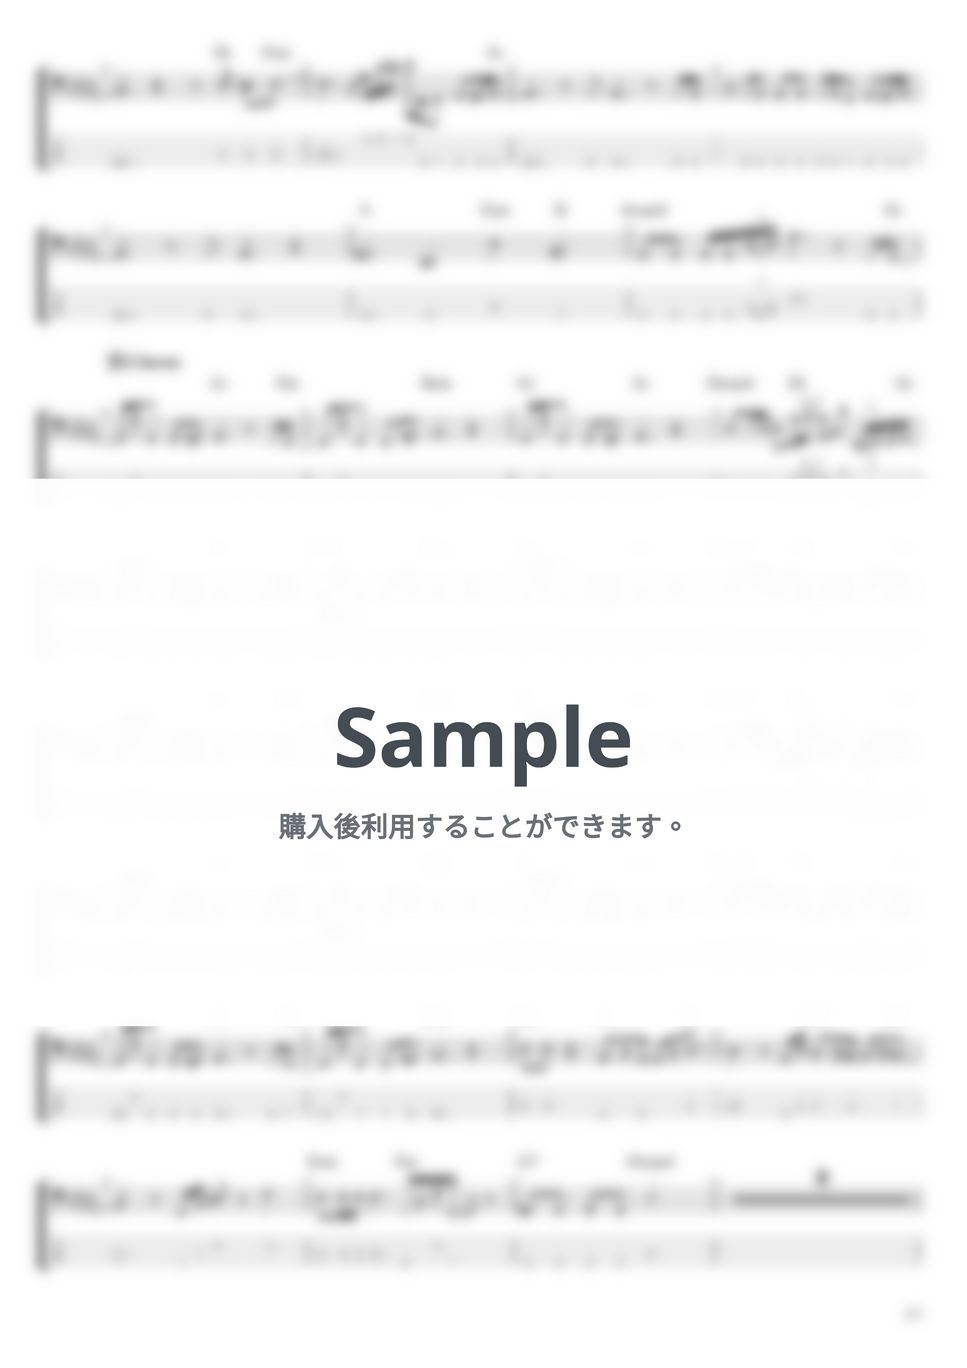 緑黄色社会 - Party!! (ベース Tab譜 4弦) by T's bass score